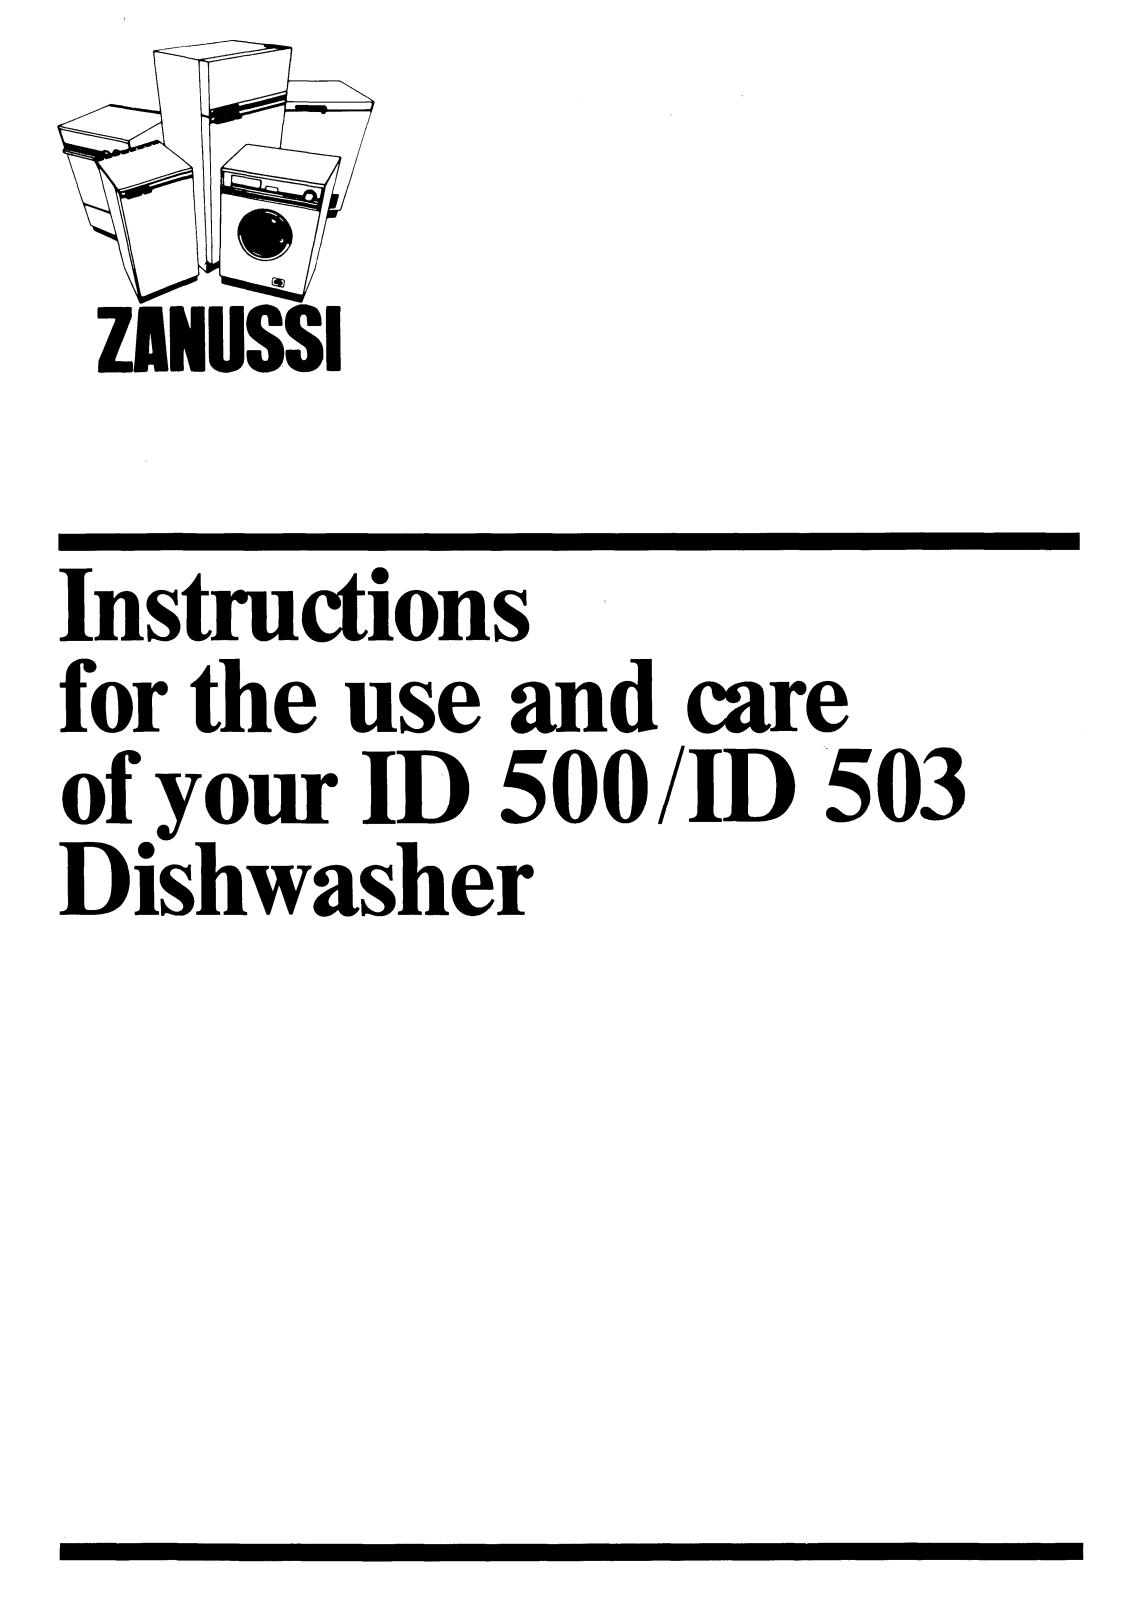 Zanussi U05019 ID 503, U05019 ID 500 User Manual